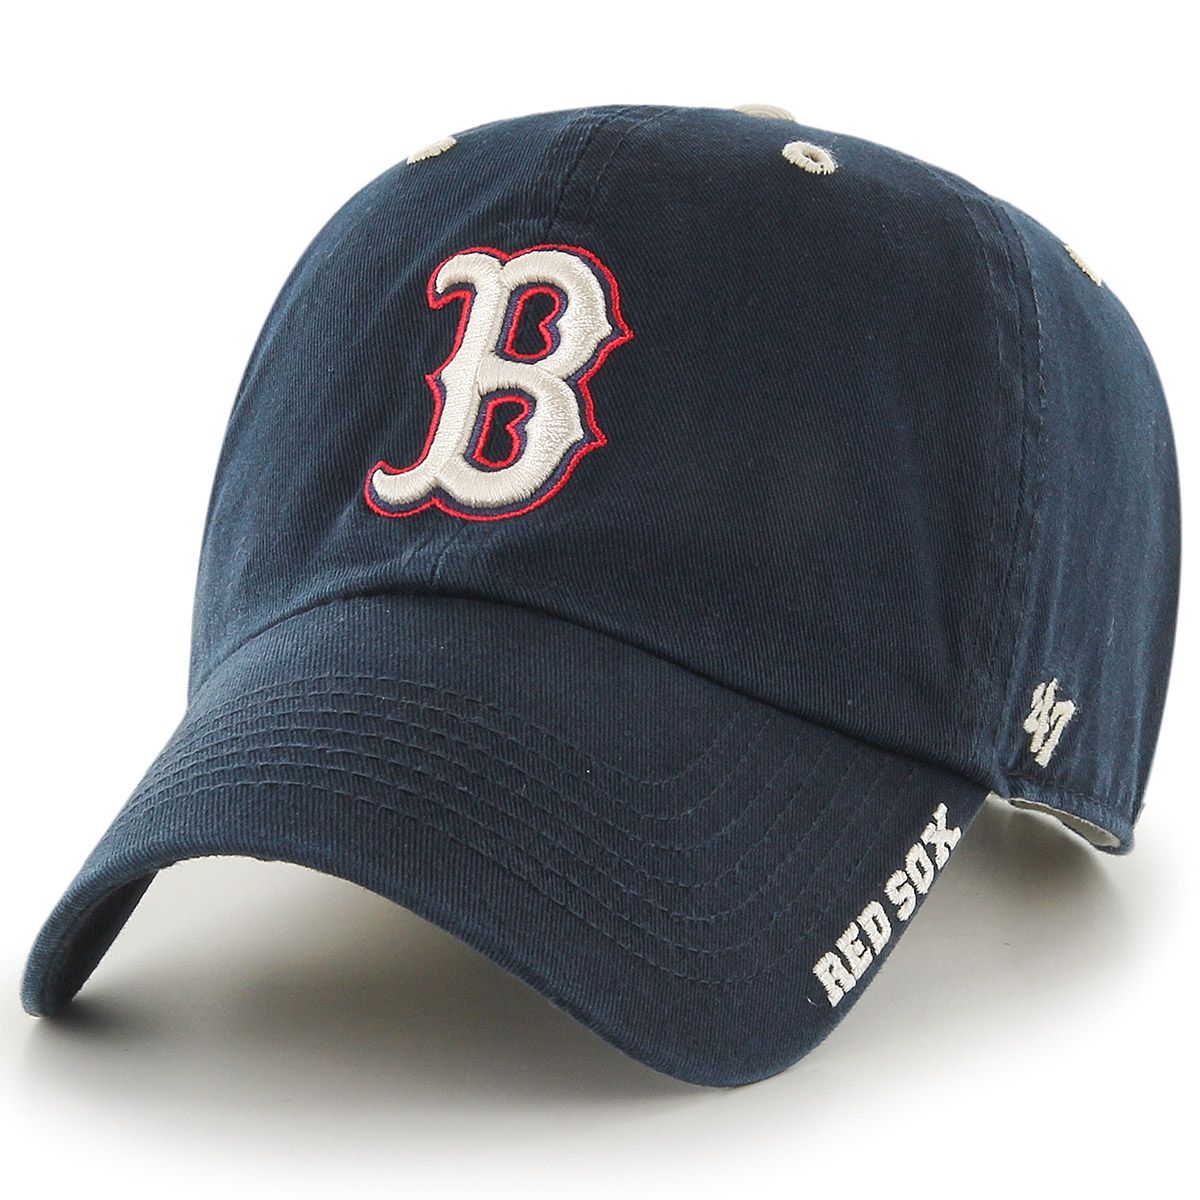 Boston Red Sox Apparel & Gear: Jerseys, Hats & More